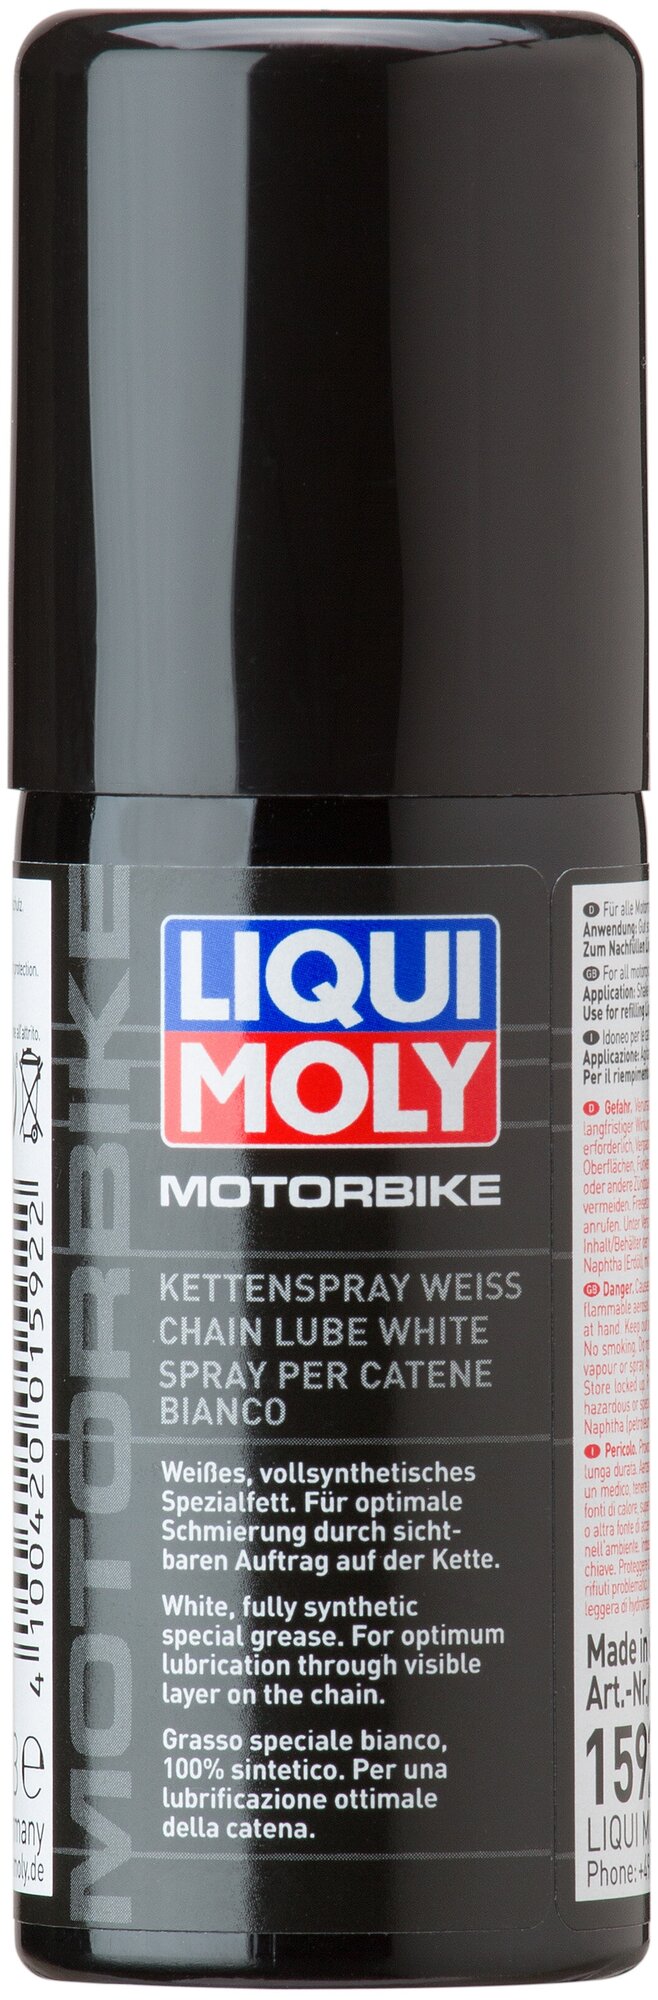 Белая цепная смазка для мотоциклов Motorbike Kettenspray weiss 005л